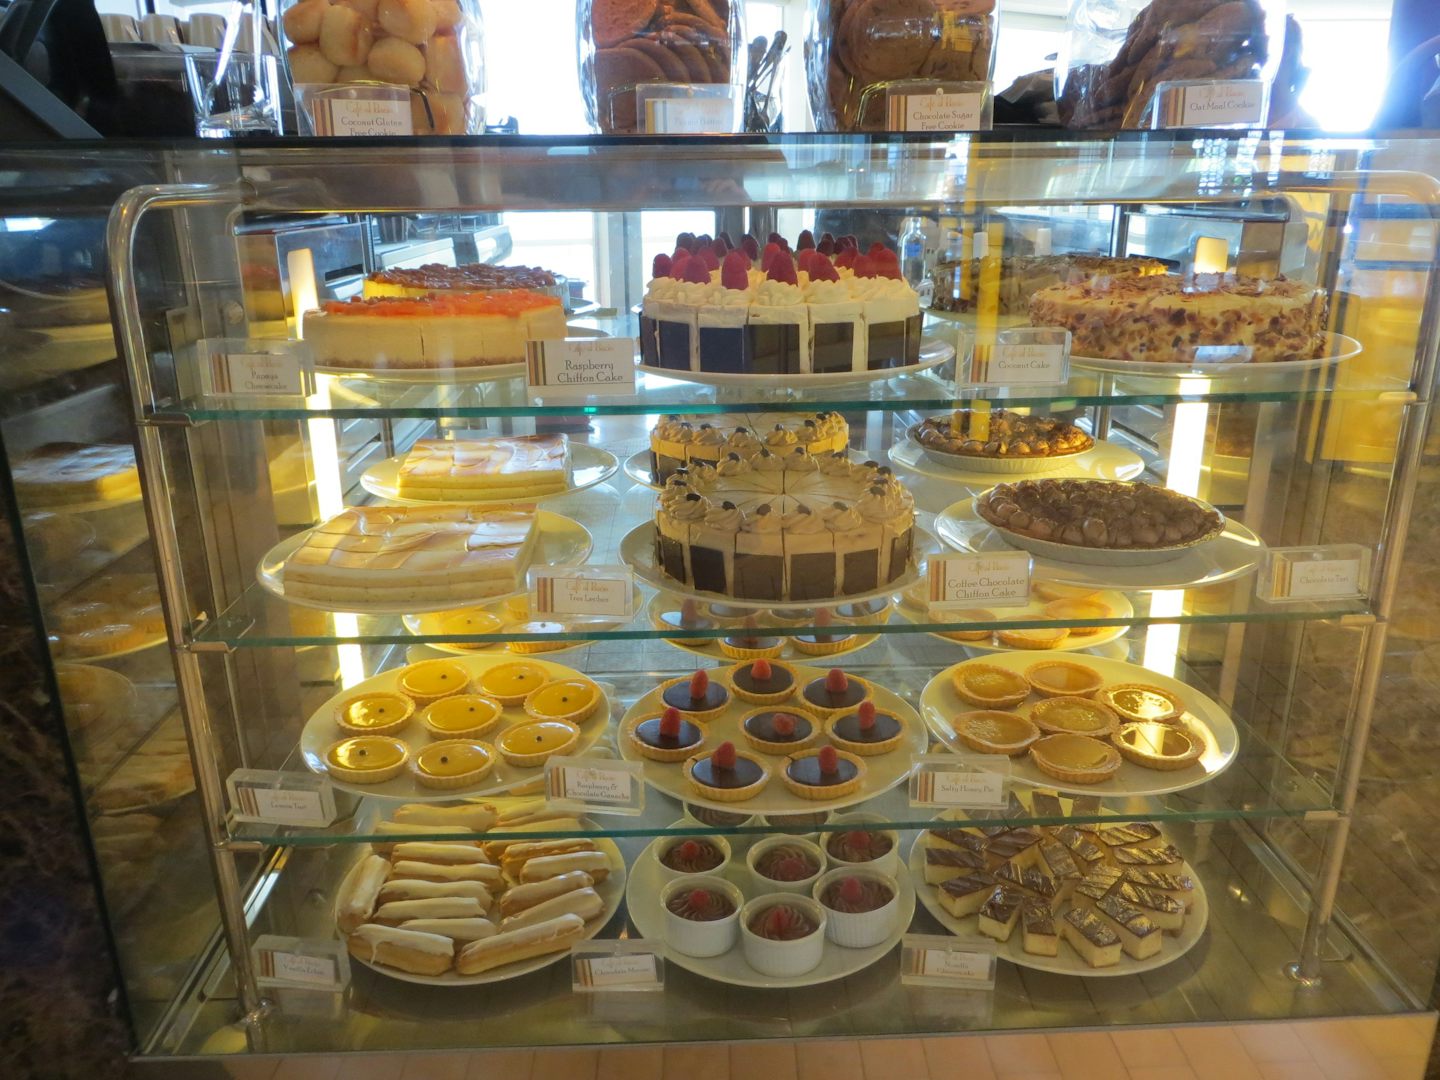 Afternoon treats at Cafe Al Bacio - try the lemon tarts